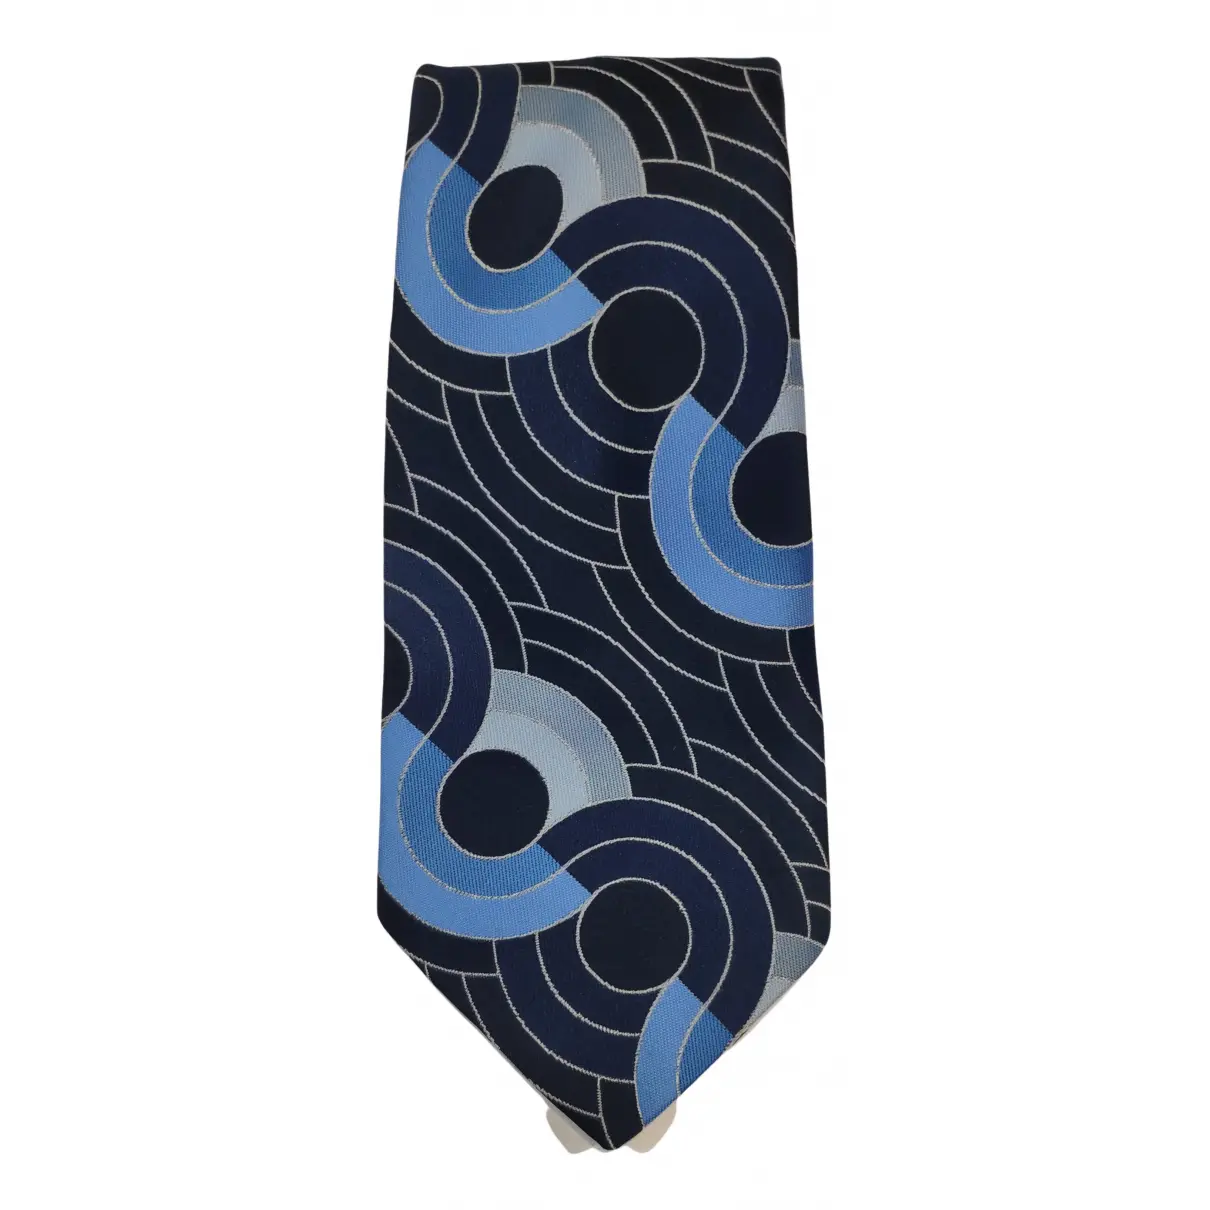 Buy Nina Ricci Silk tie online